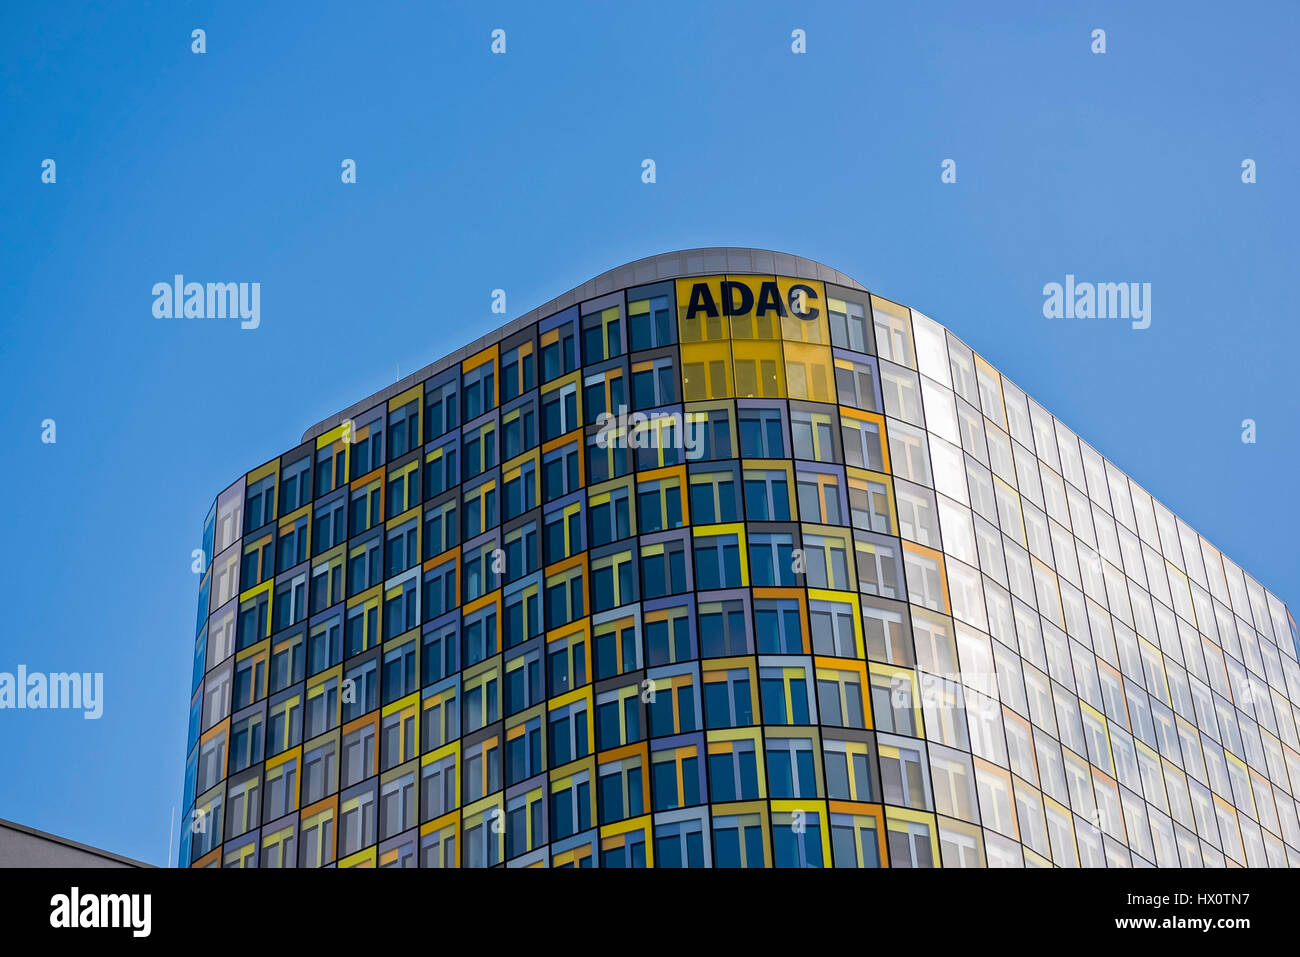 ADAC German Automobil Club Headquarter Building in Munich, Germany Stock Photo